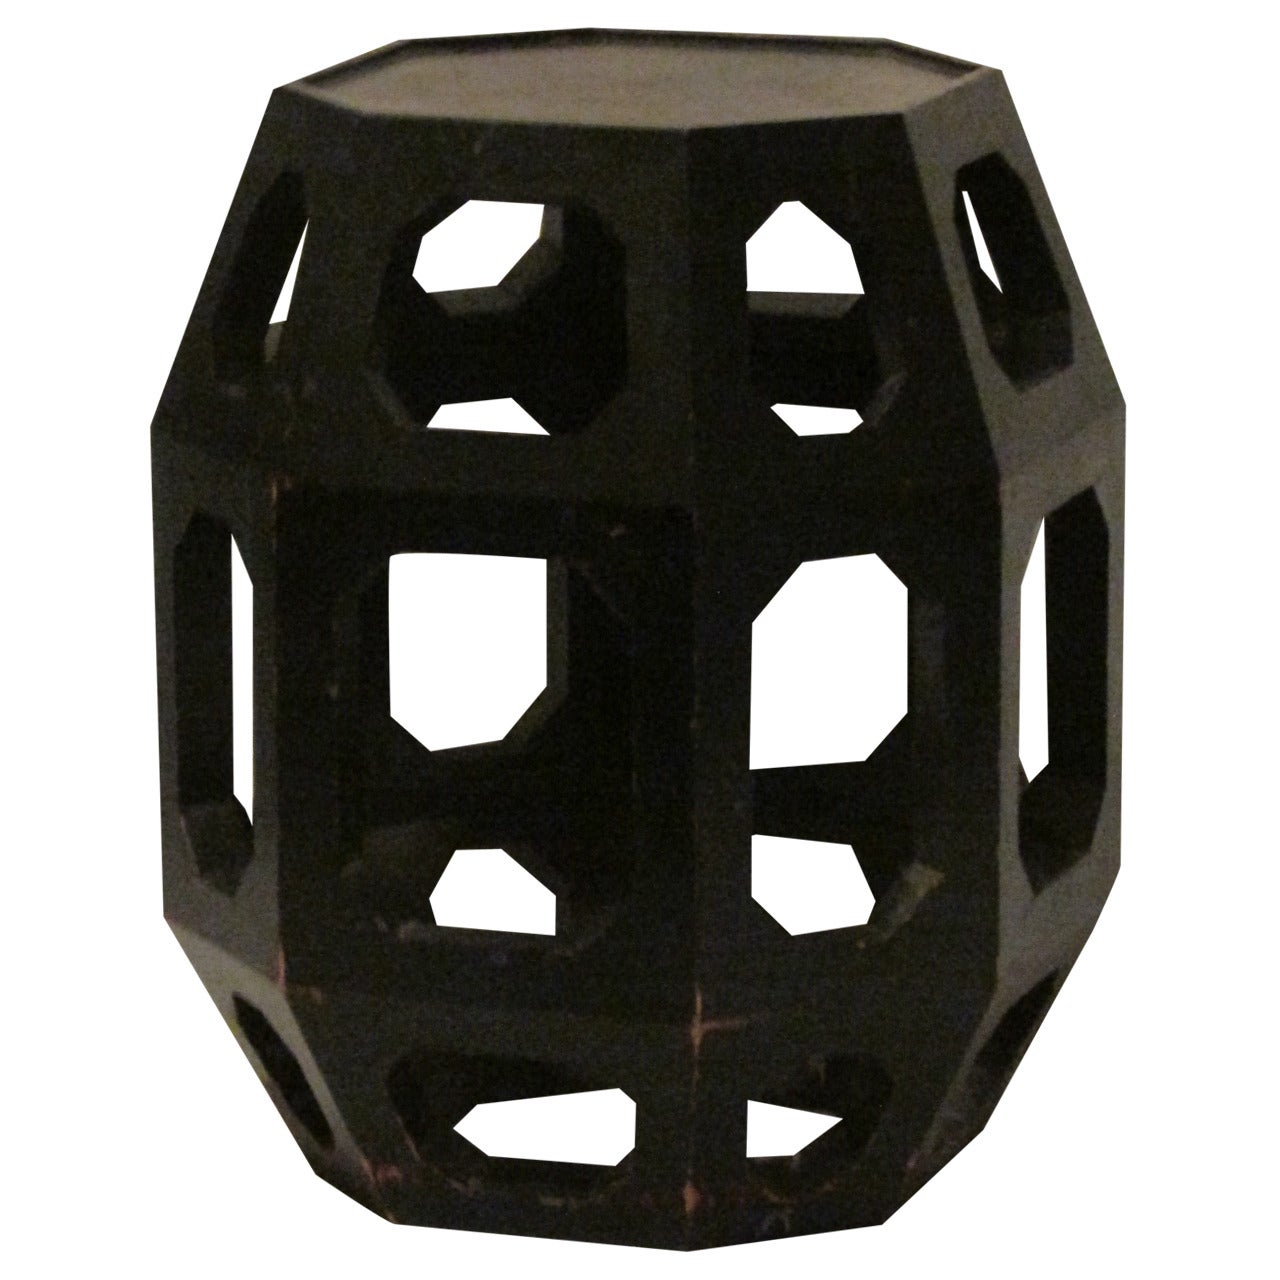 Octagonal Ebonized Drum Table Stool